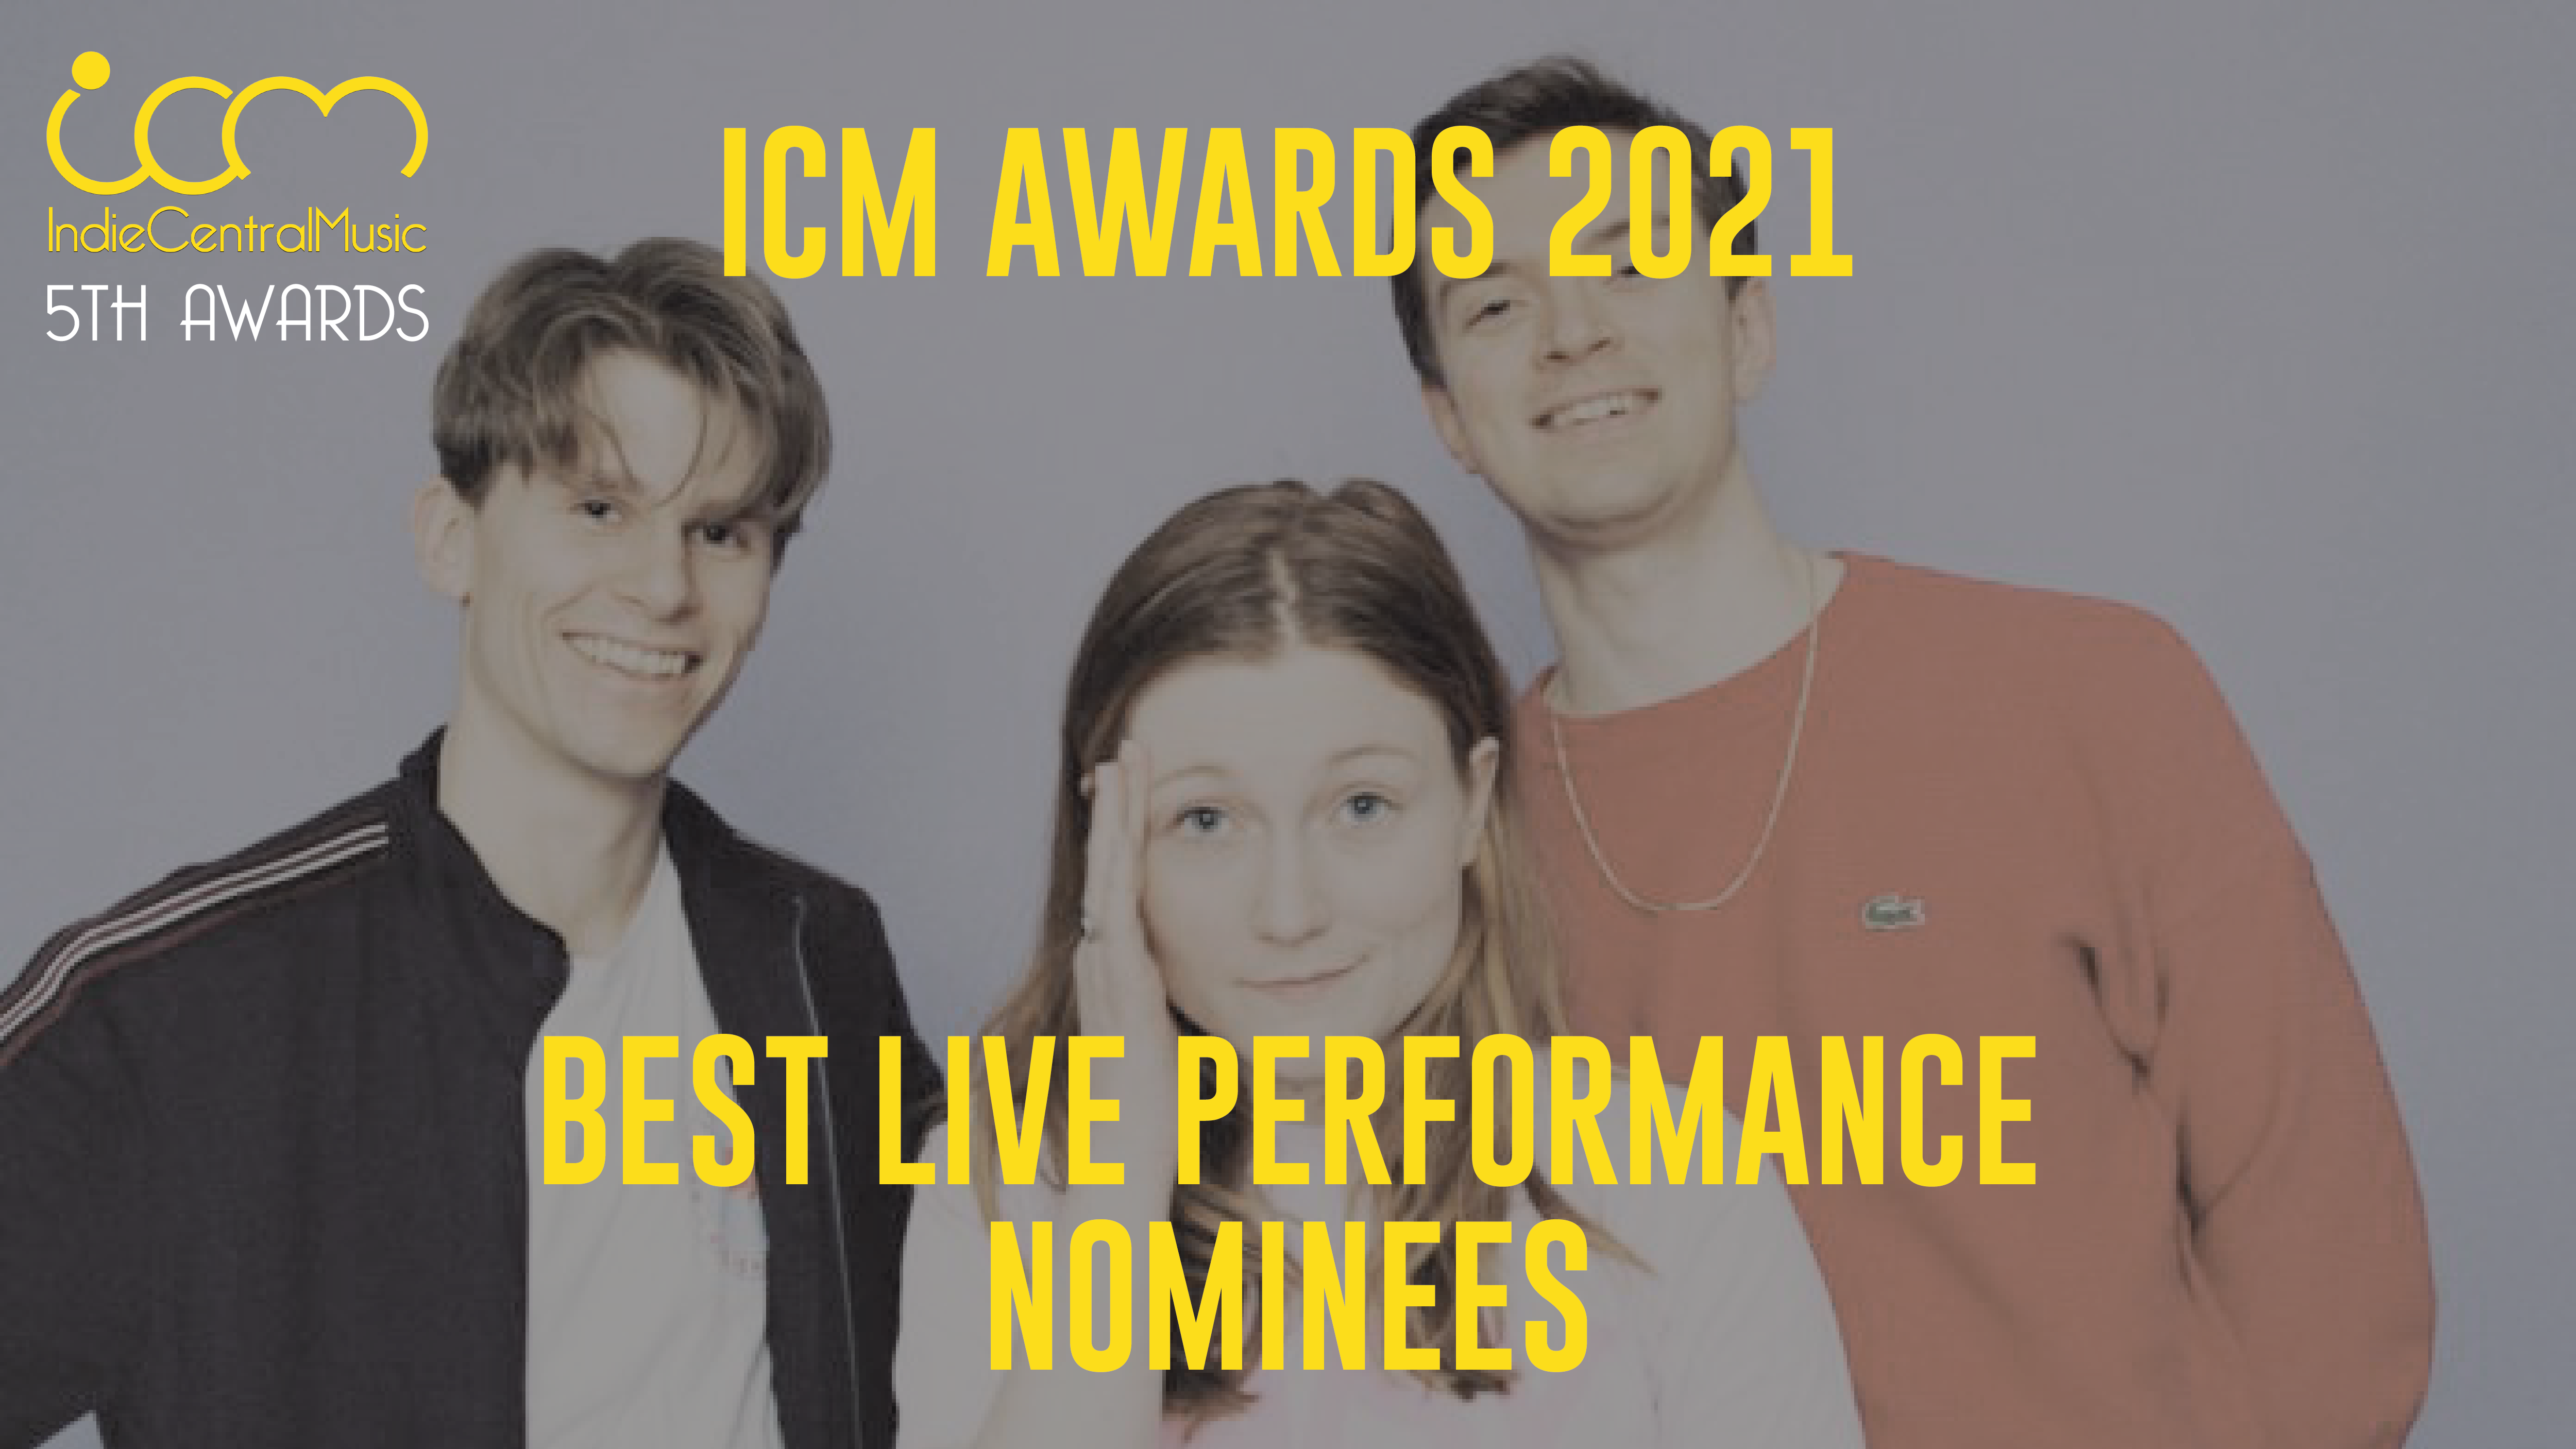 ICM Awards 2021 Best Live Performance nominees IndieCentralMusic